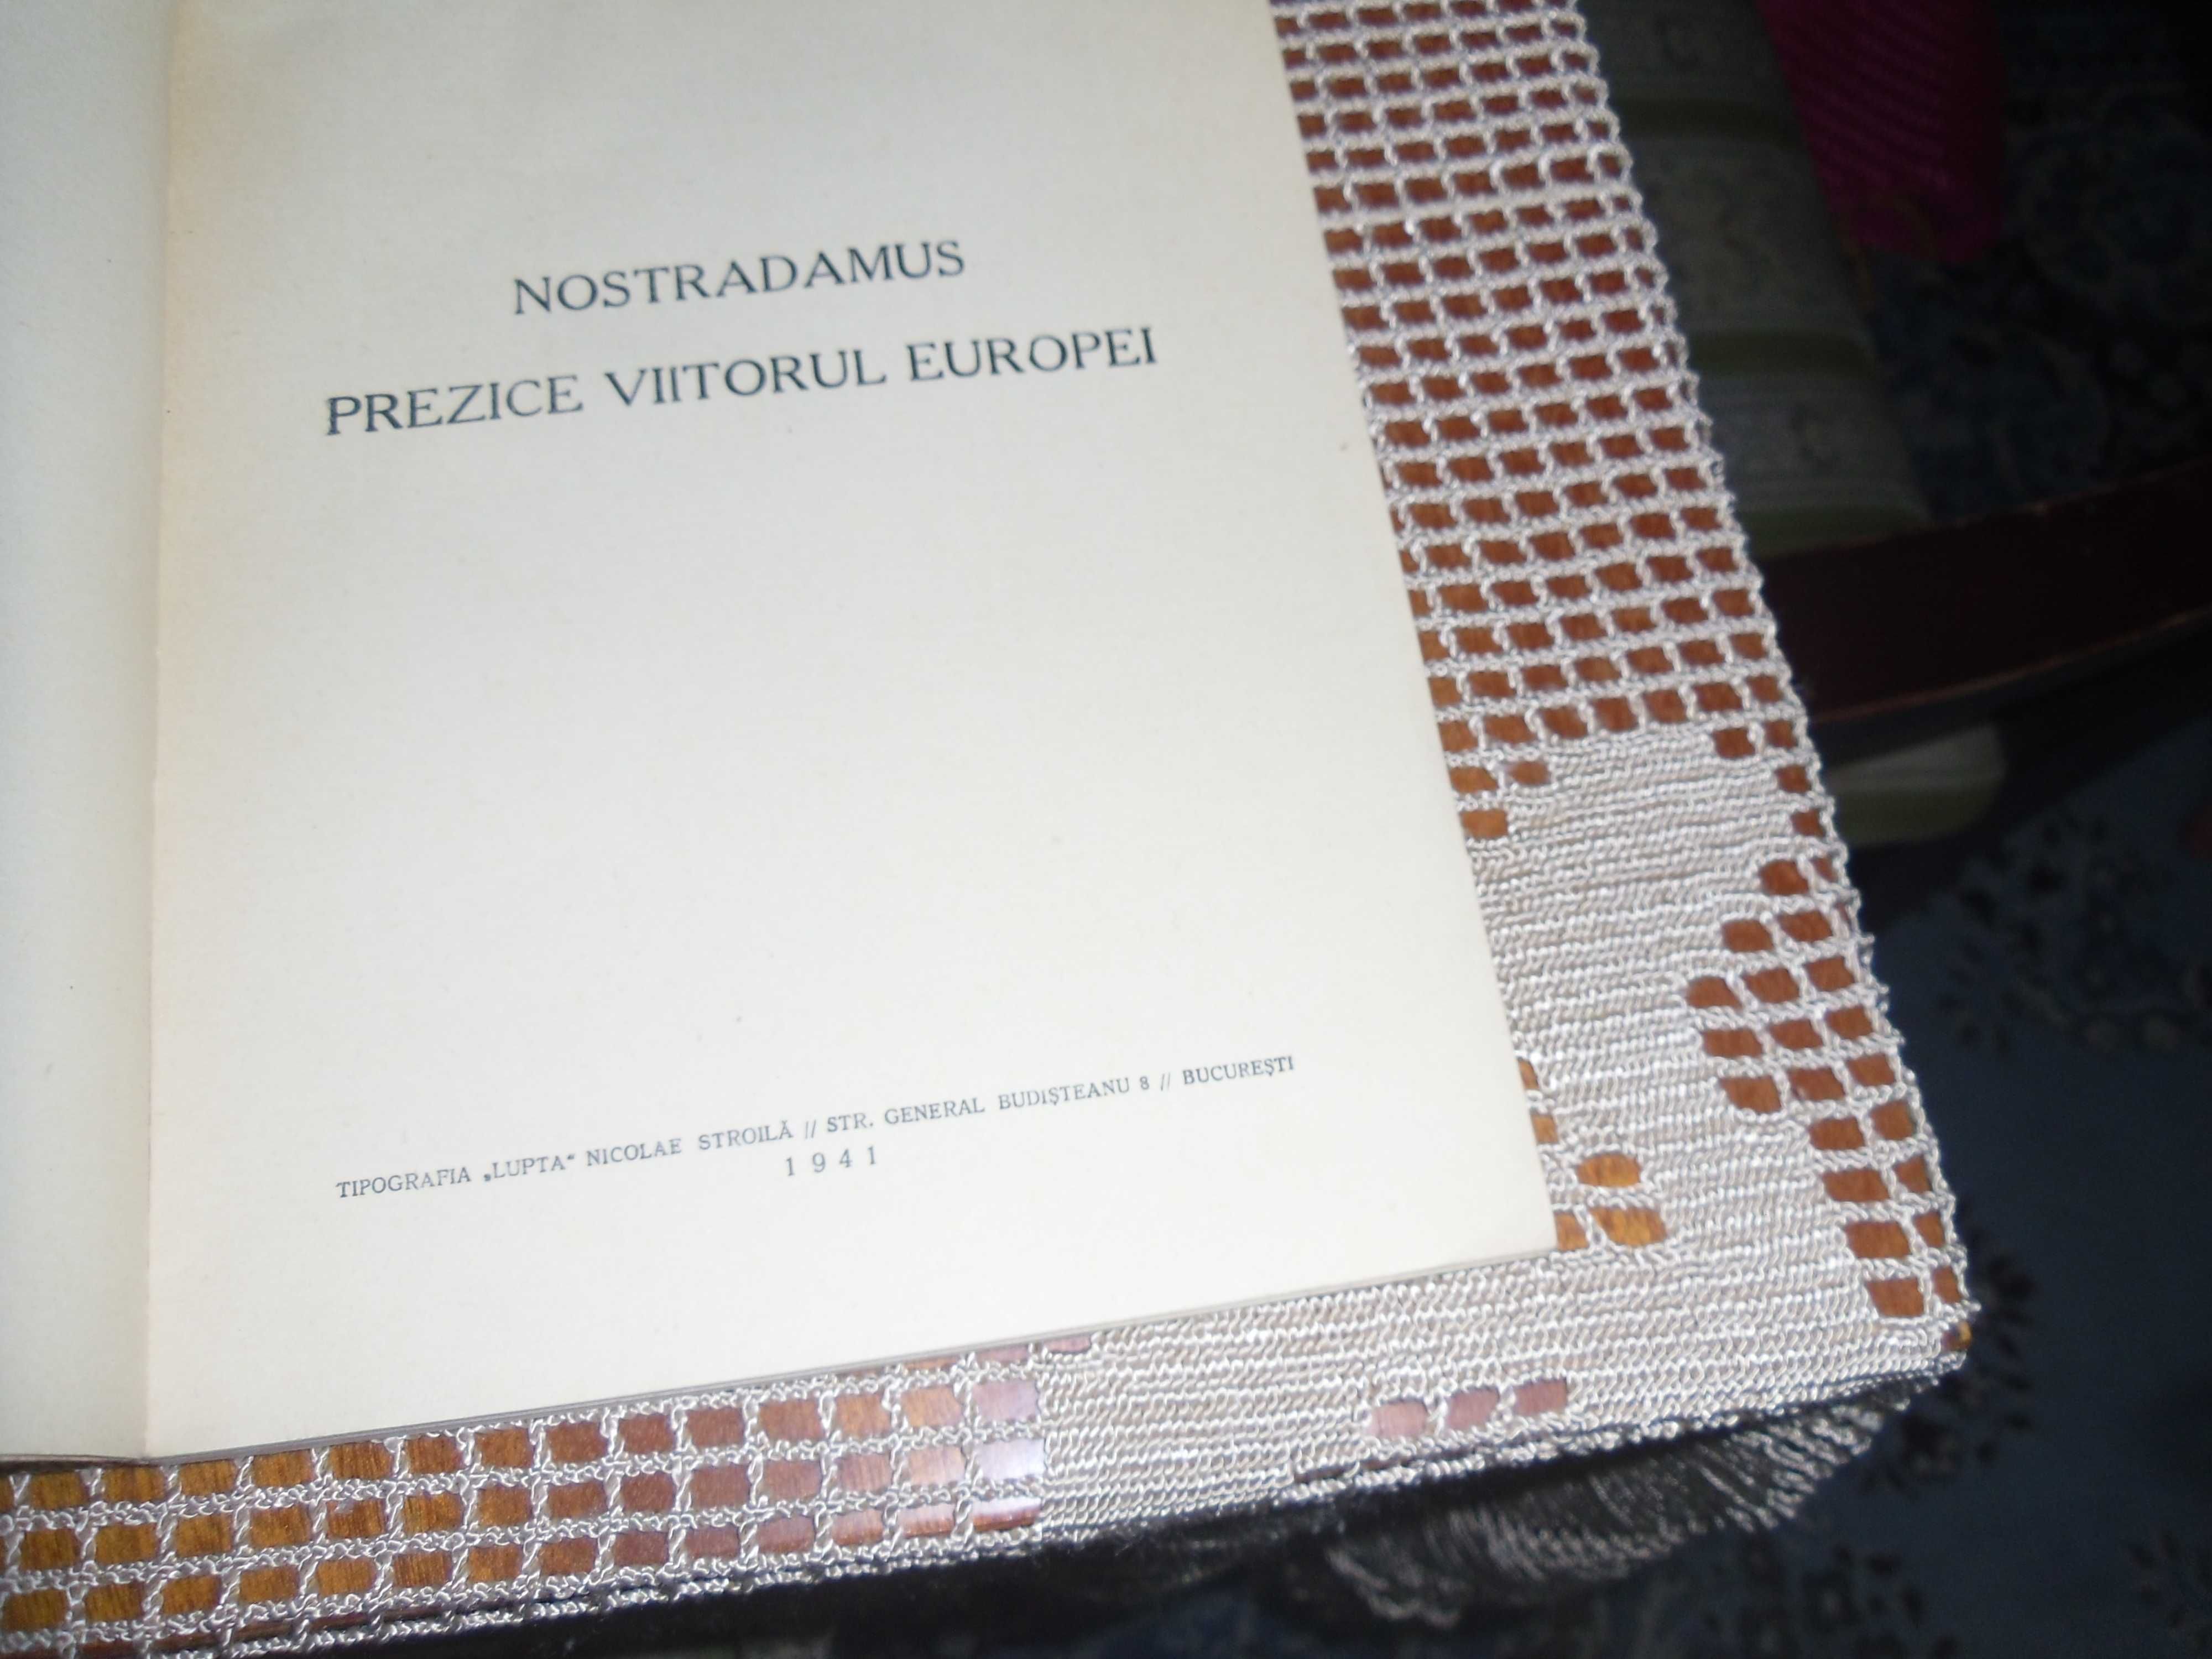 Nostradamus prezice viitorul Europei ed 1941